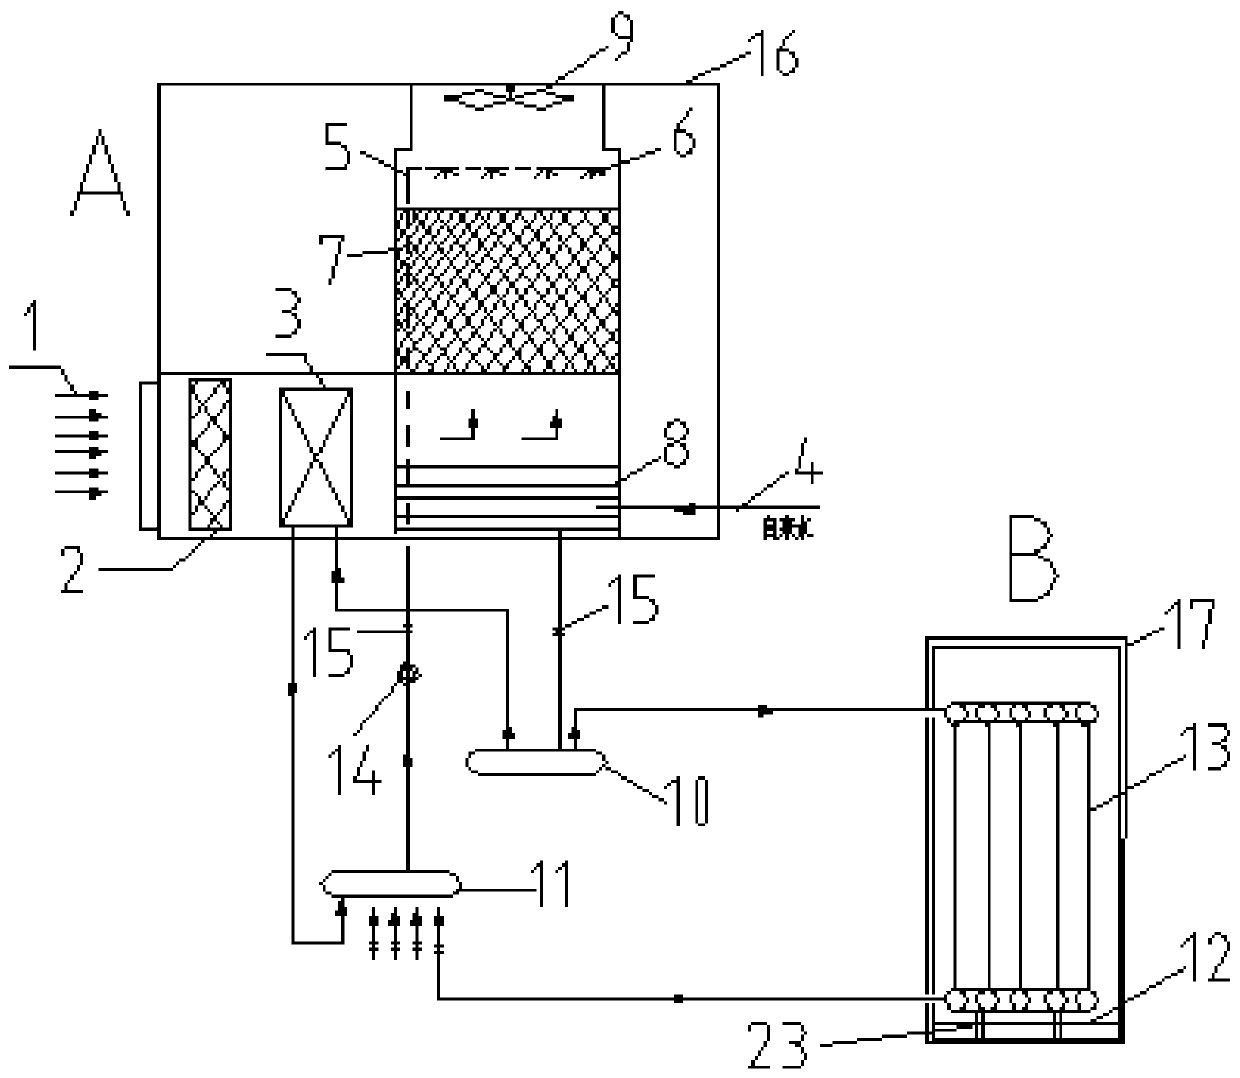 Cooling system based on evaporative cooling technology